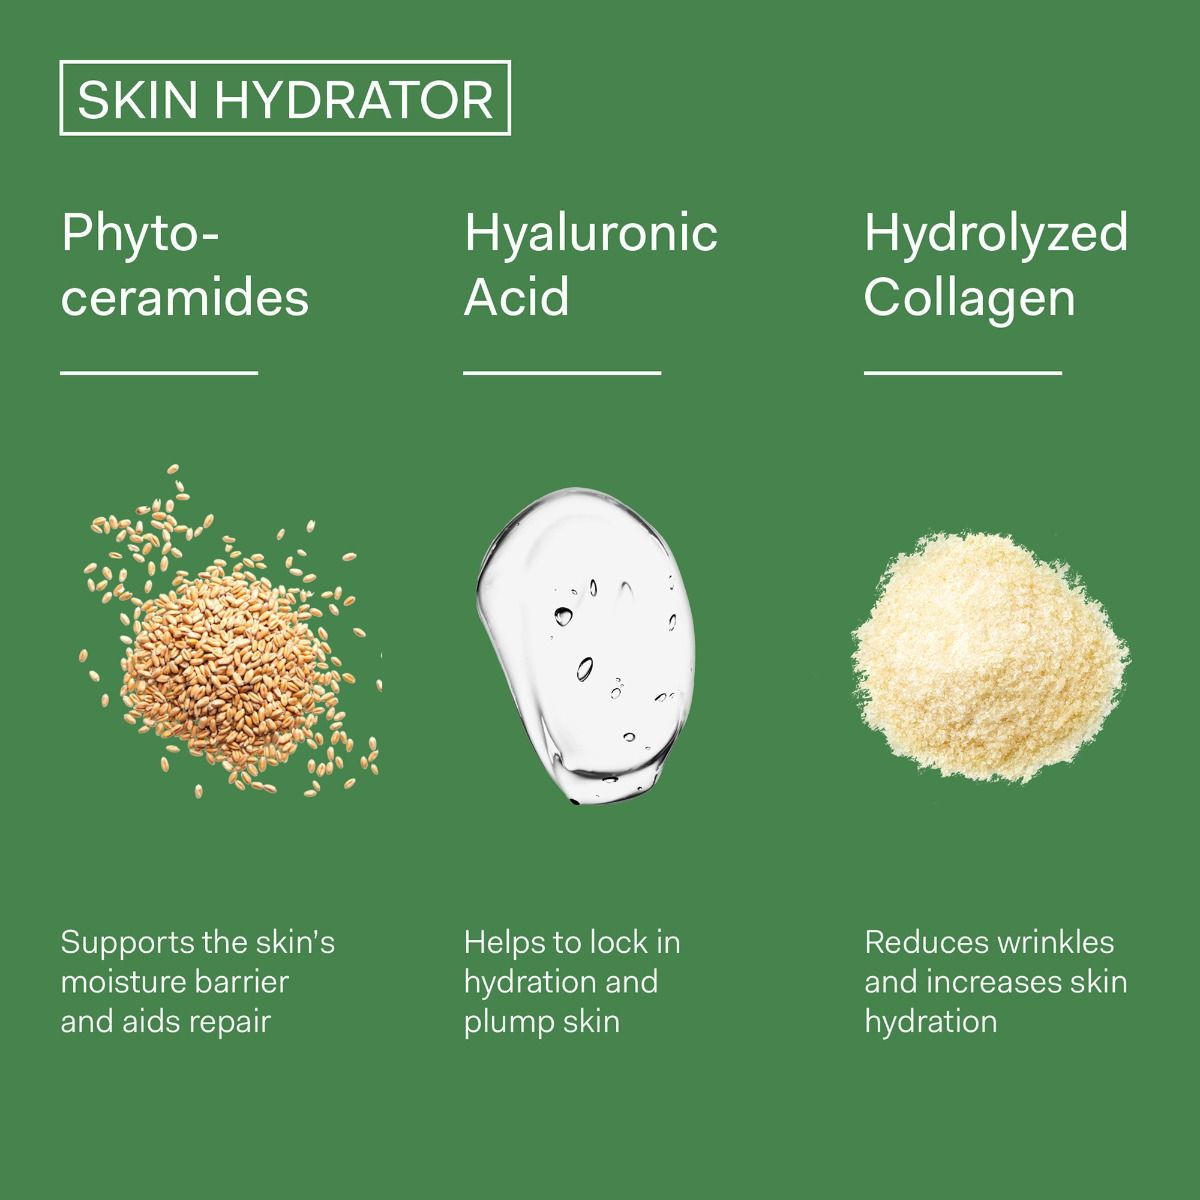 Skin Hydrator